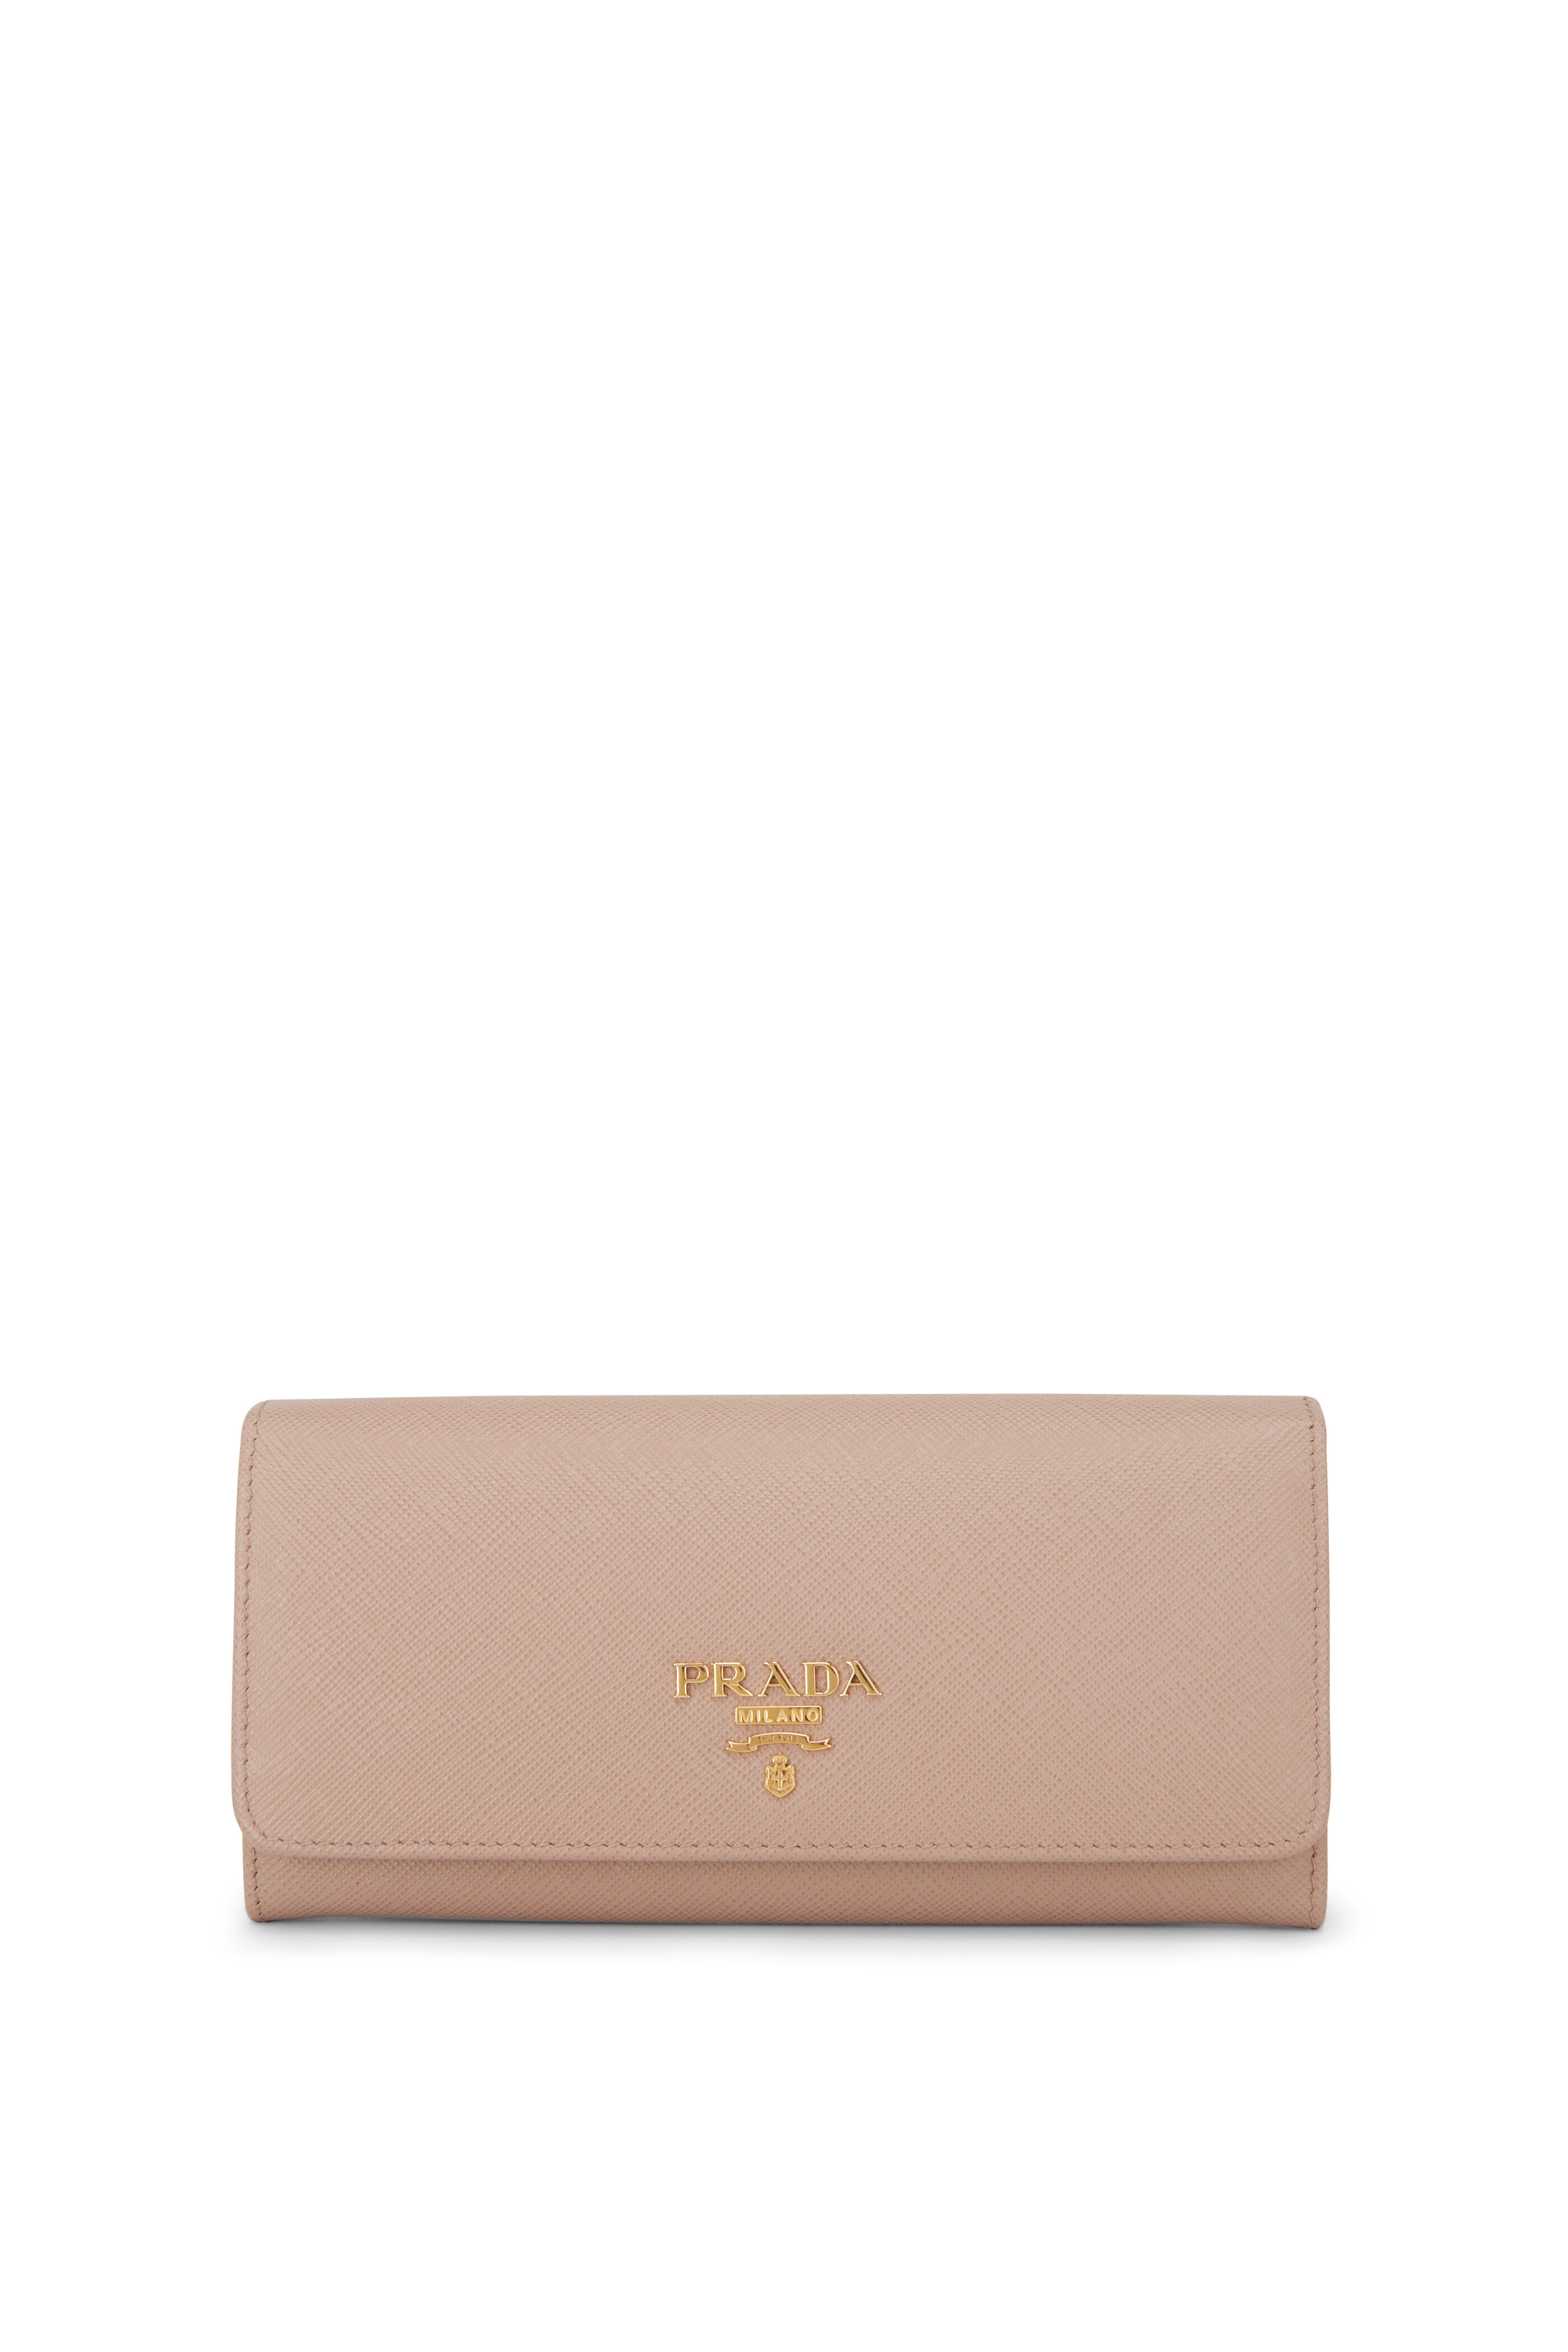 PRADA Saffiano Leather Bi-Fold Wallet Card Case Coin Purse Red - Final